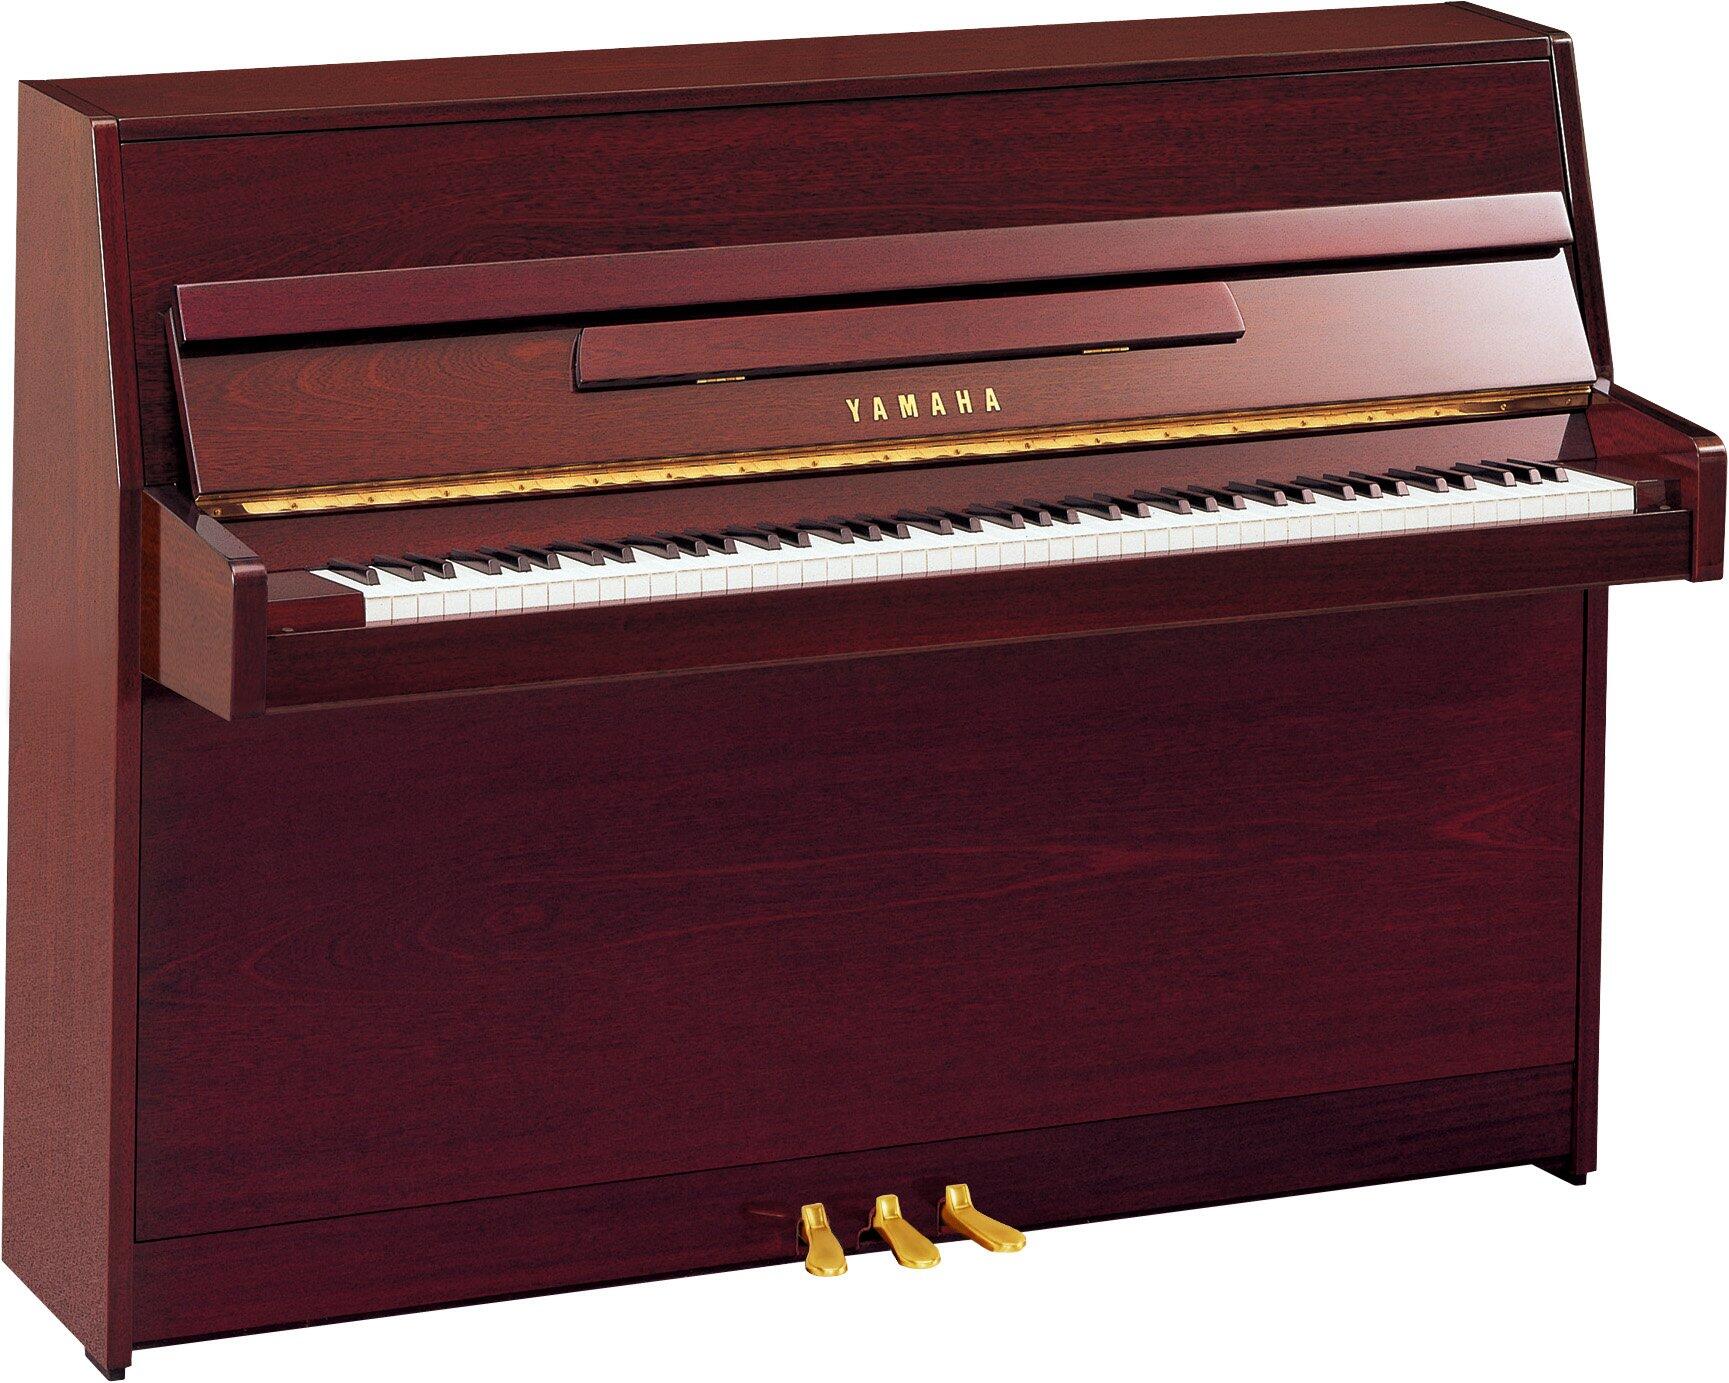 Yamaha Pianos Silent B1 SC3 PM Silent Glossy Mahogany 109 cm : photo 1